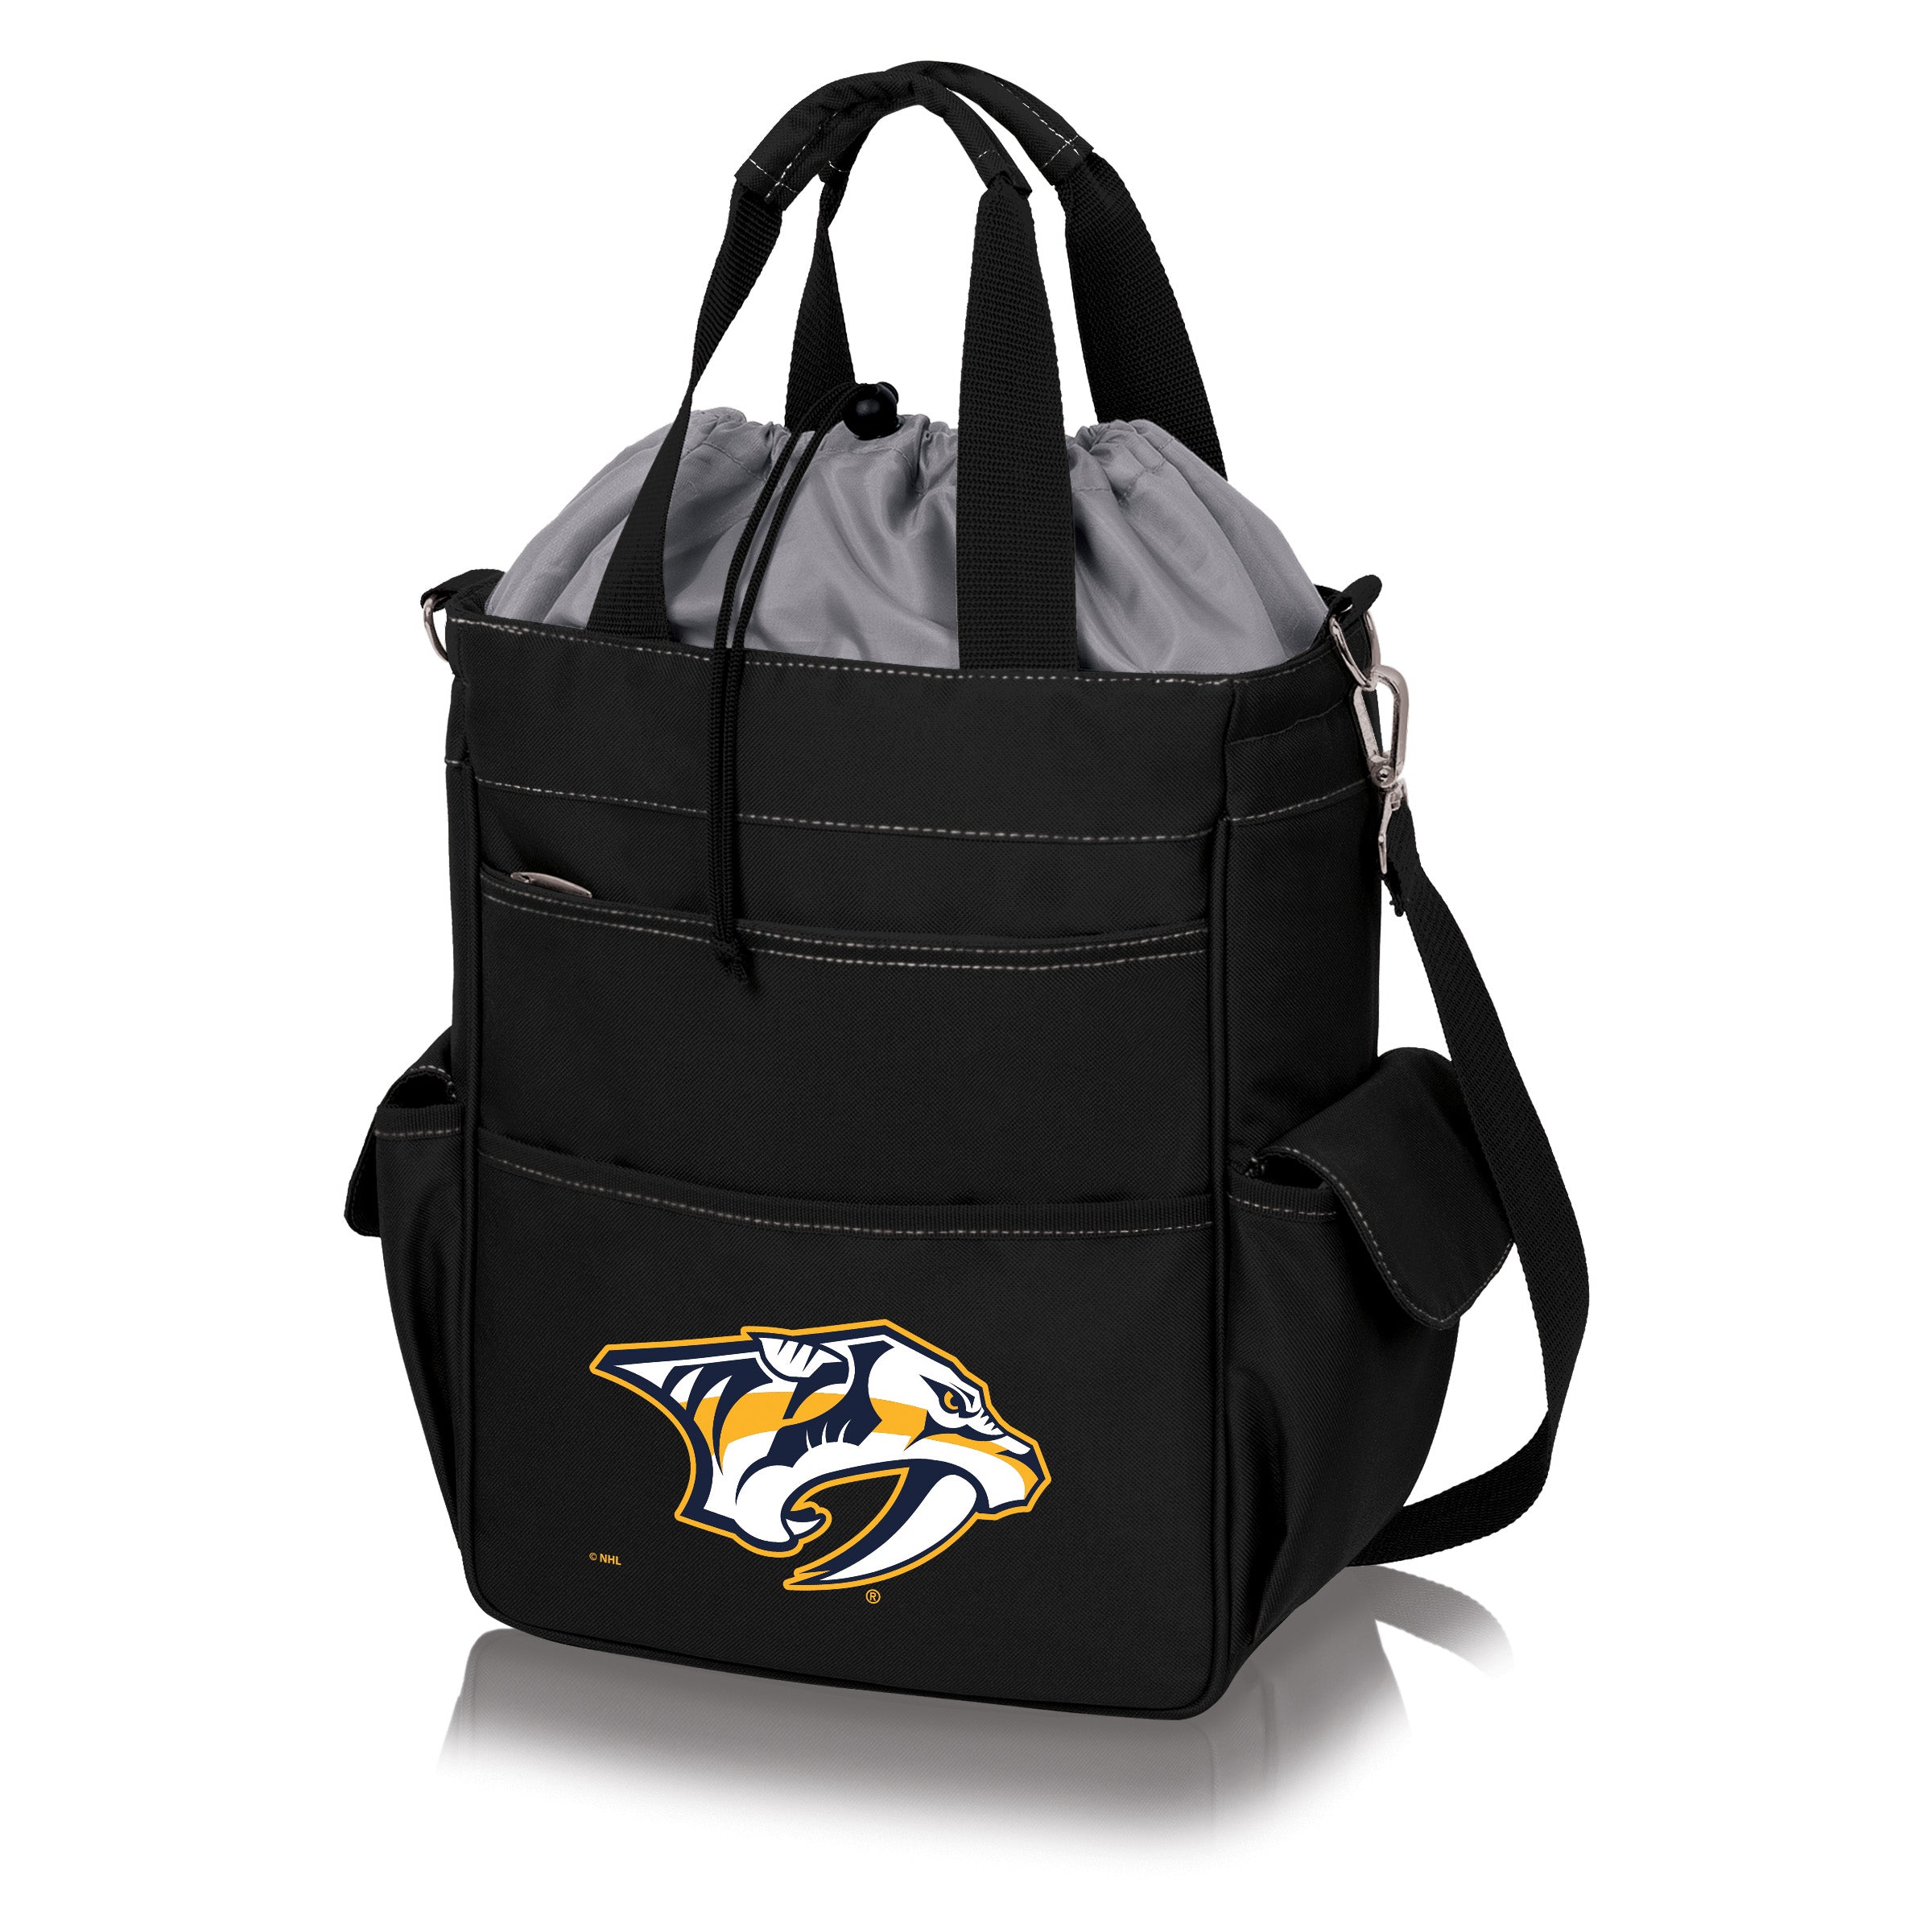 Nashville Predators - Activo Cooler Tote Bag